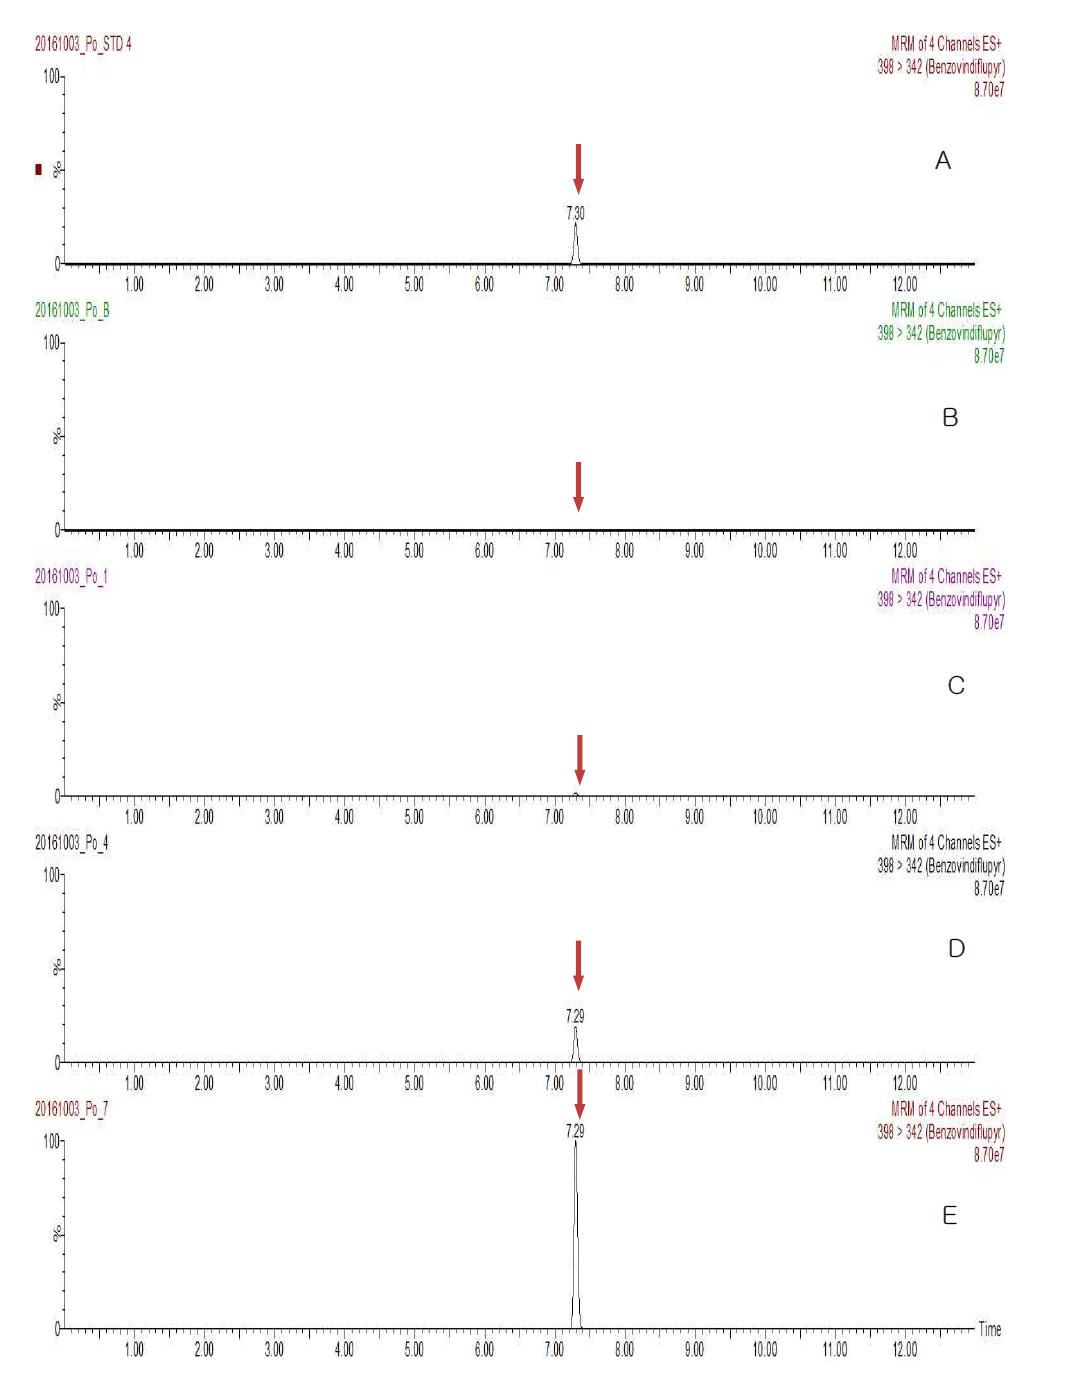 Representative MRM(quantification ion) chromatograms of Benzovindiflupyr corresponding to: (A) standard solution at 0.05 mg/kg, (B) Potato control, (C) spiked at 0.005 mg/kg, (D) spiked at 0.05 mg/kg and (E) spiked at 0.25 mg/kg